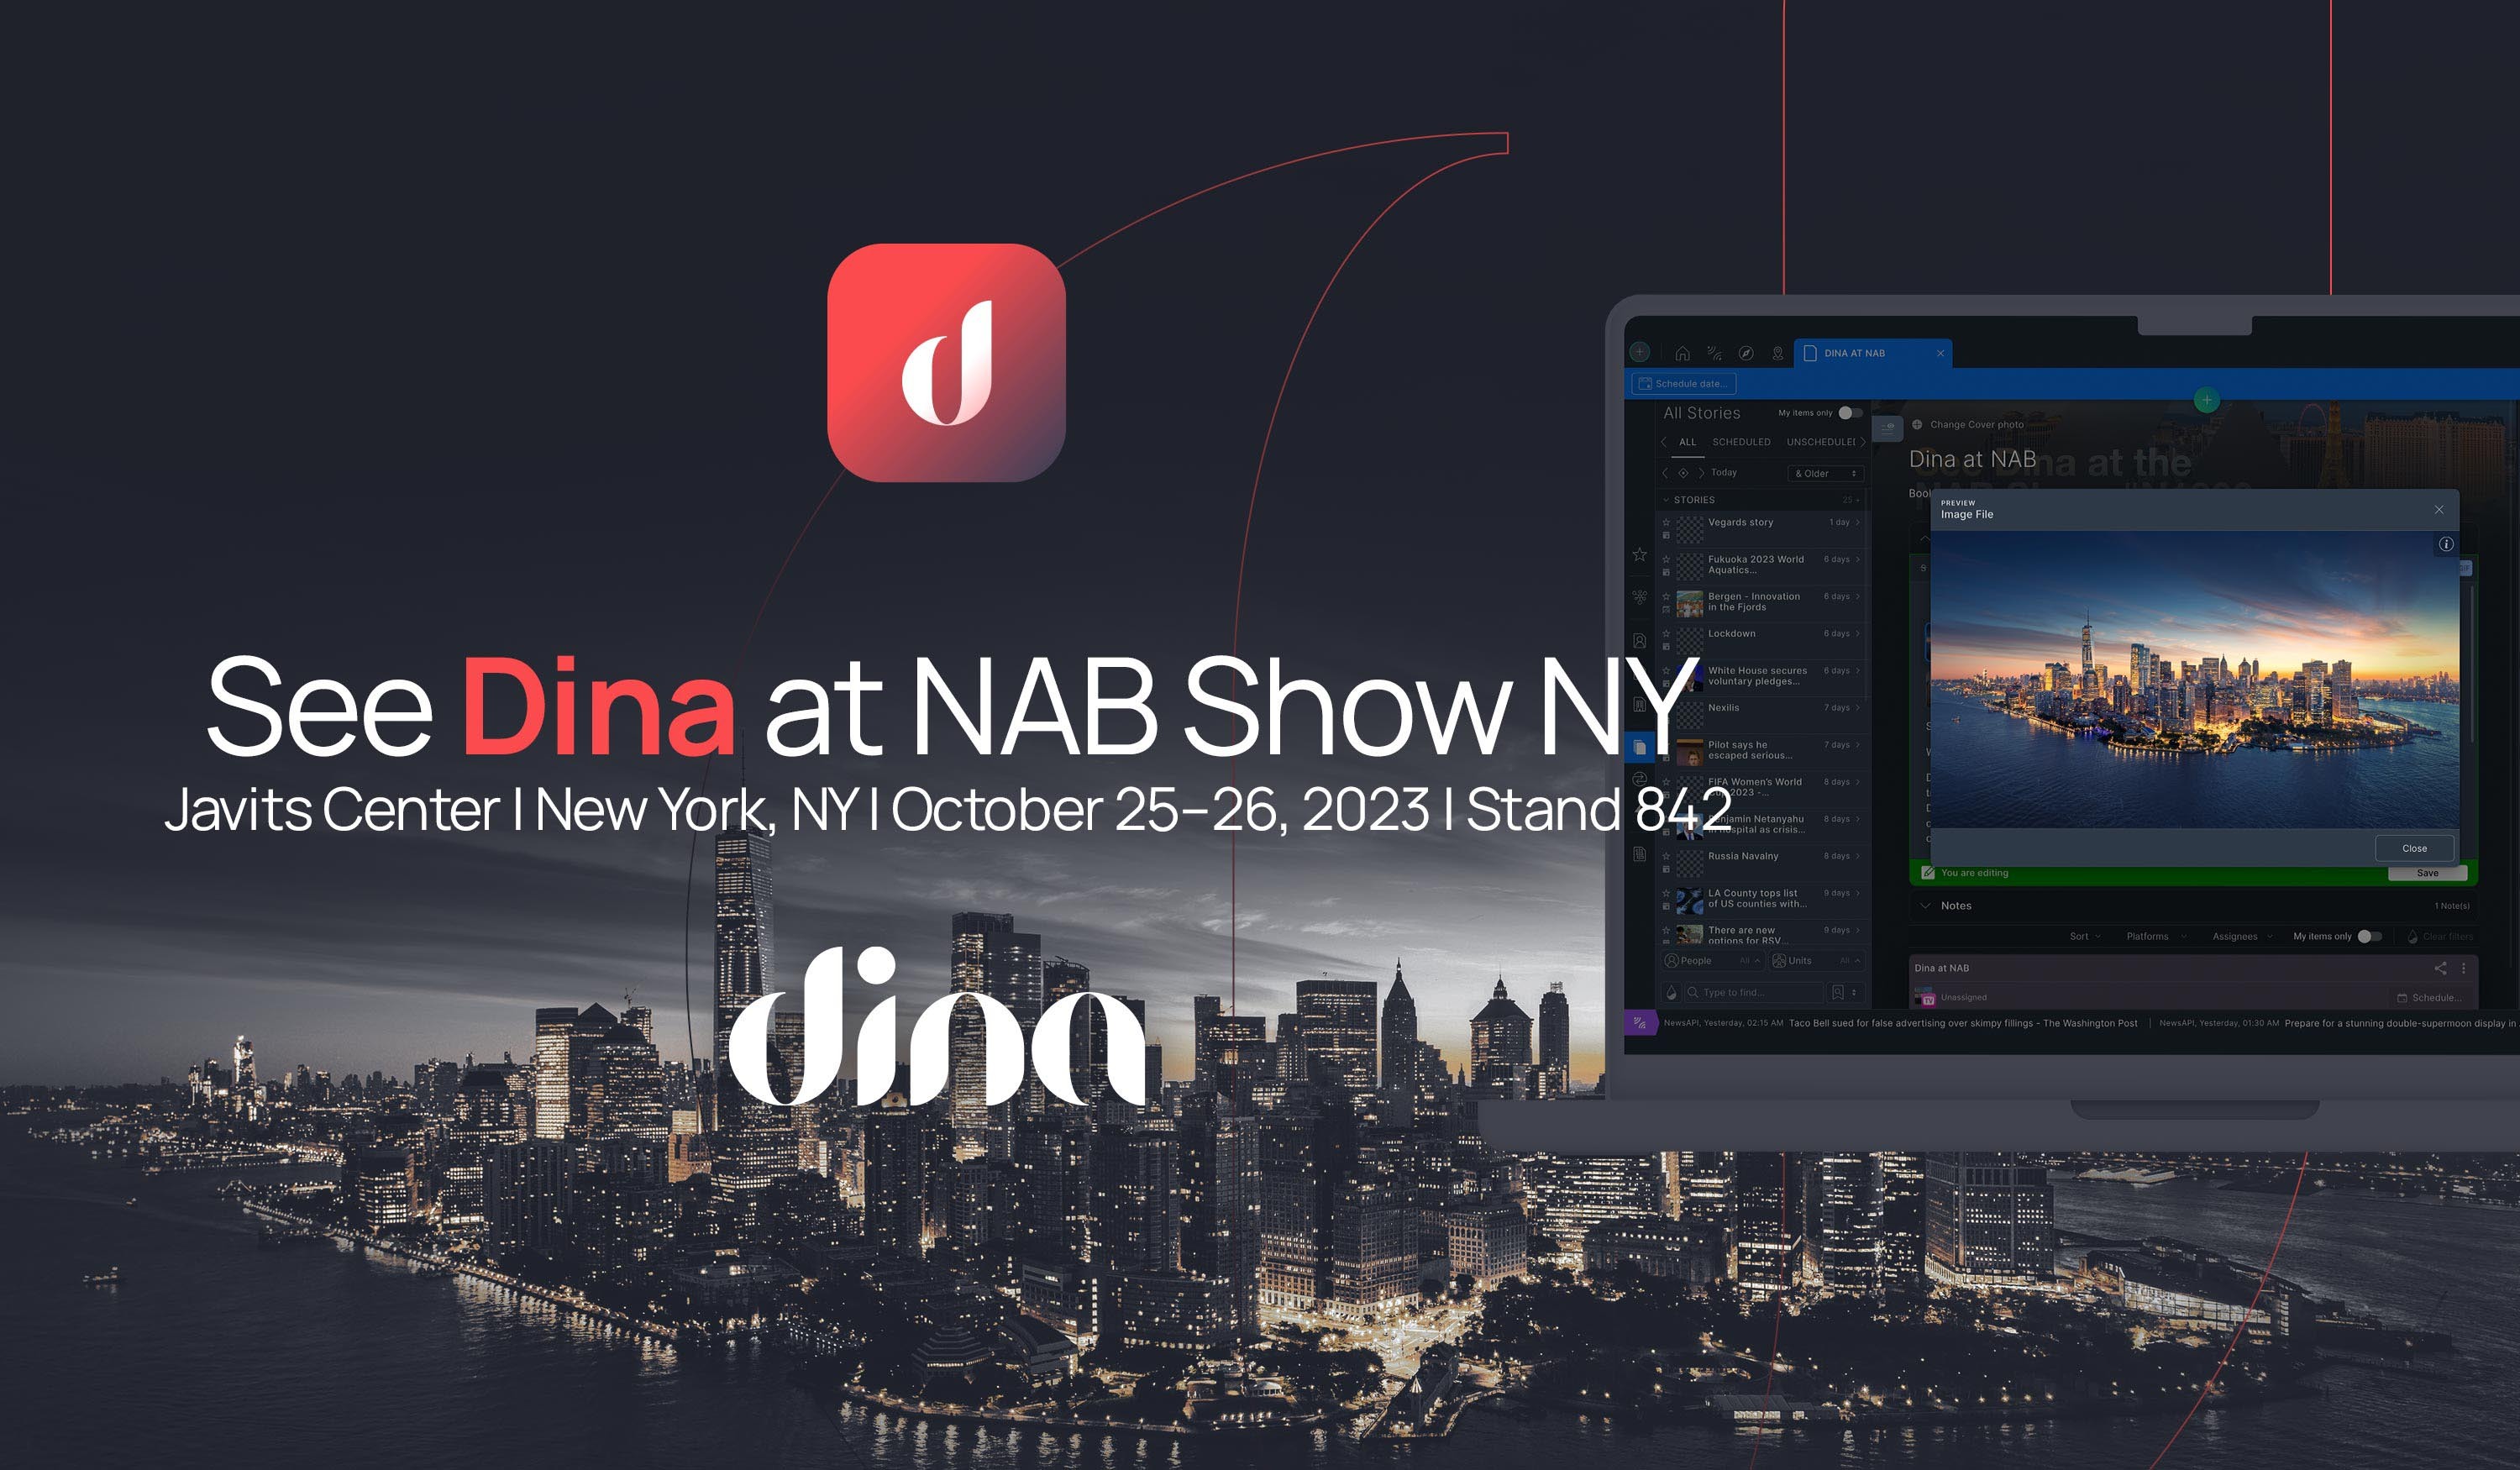 NAB Show NY banner for Dina